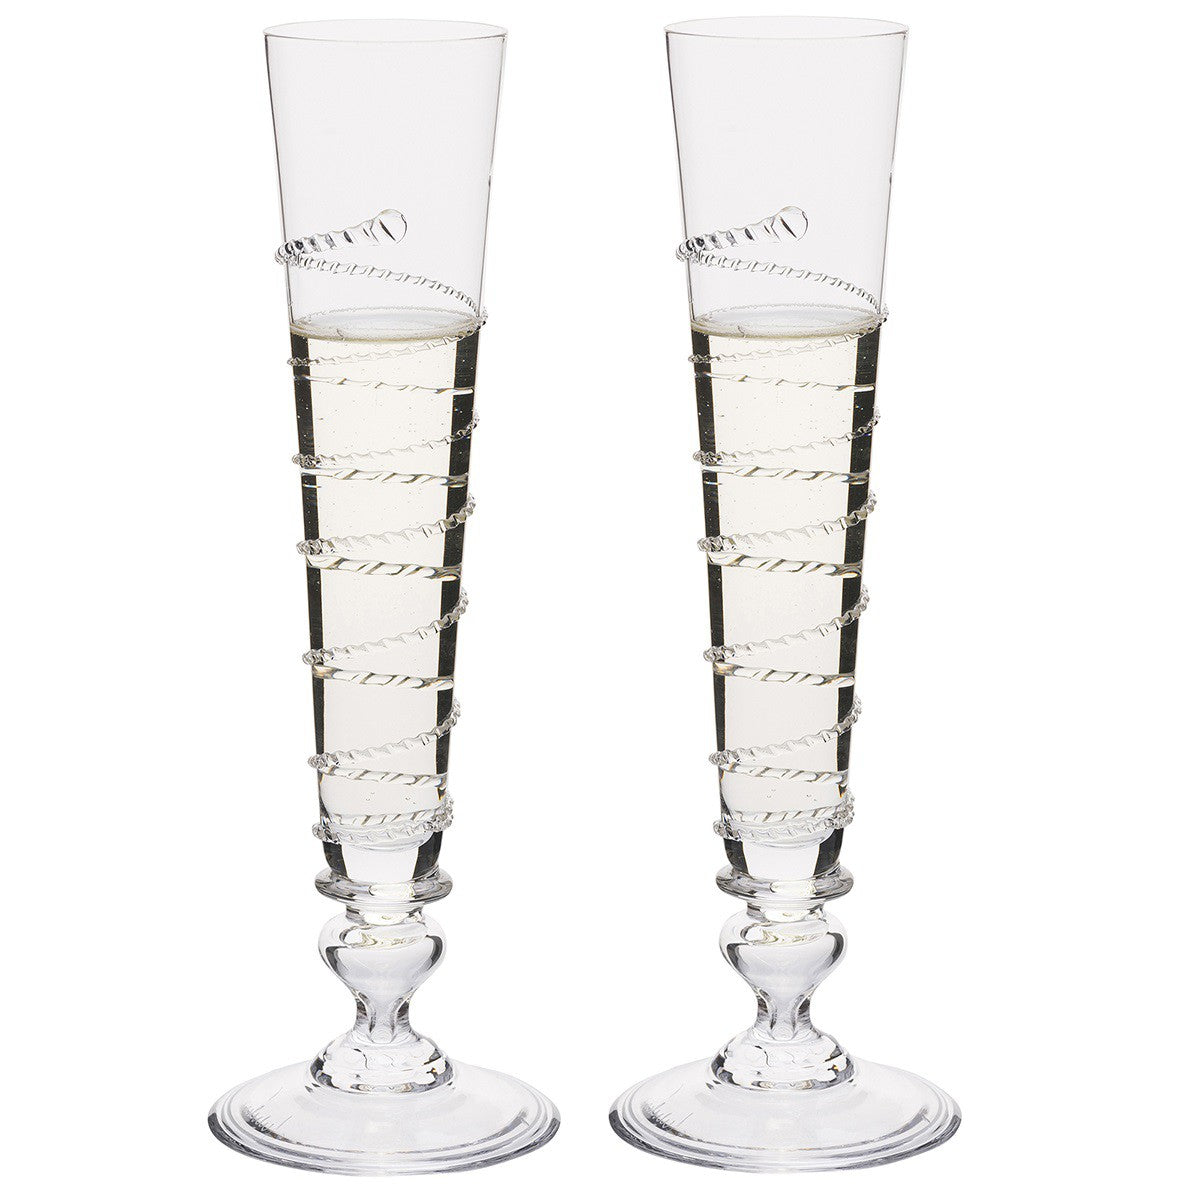 Pair of Amalia Champagne Flutes